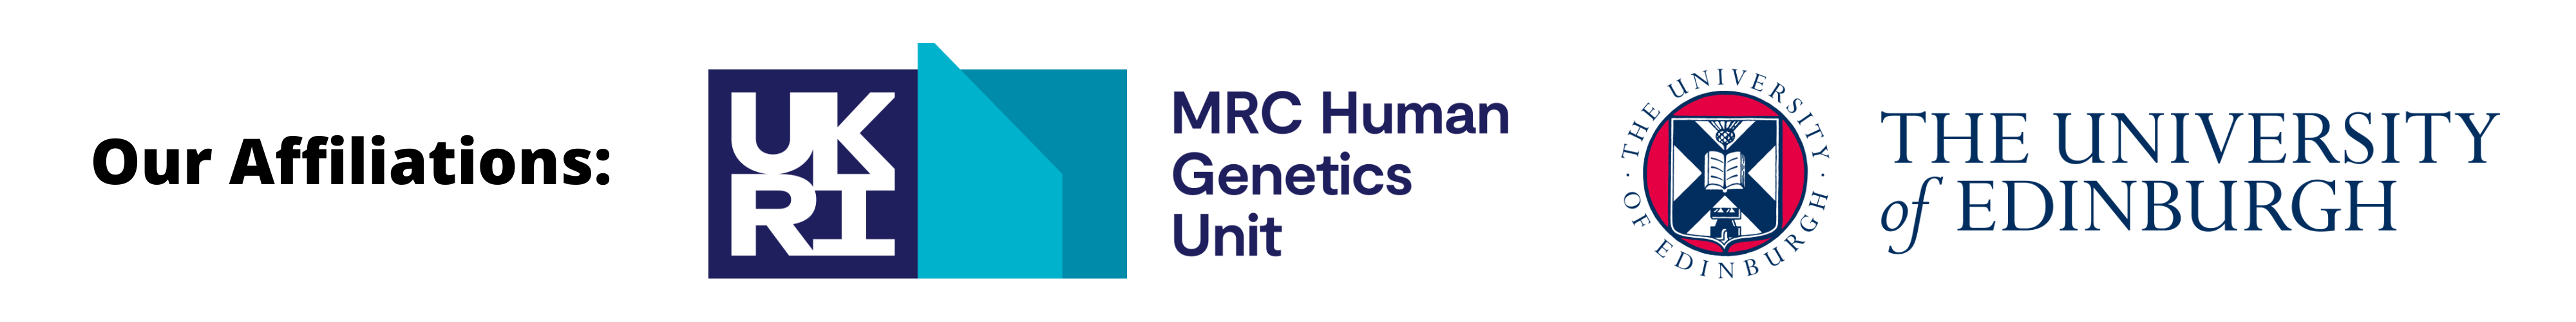 Our Affiliations: MRC HGU Logo and University of Edinburgh Logo